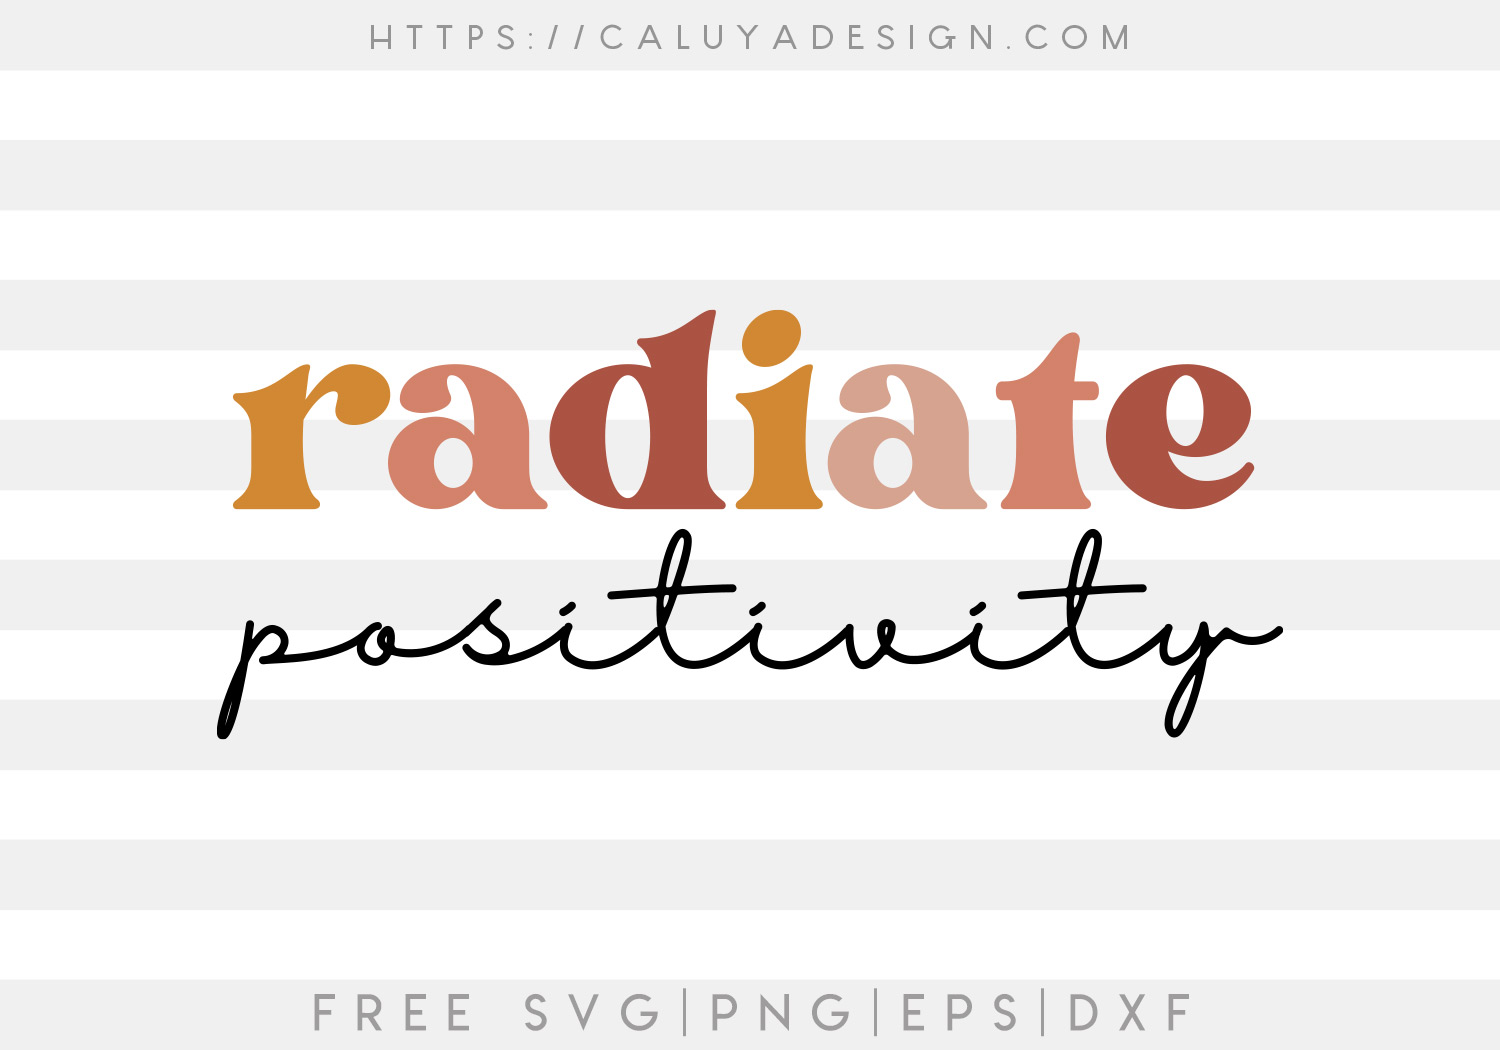 Free Radiate Positivity SVG